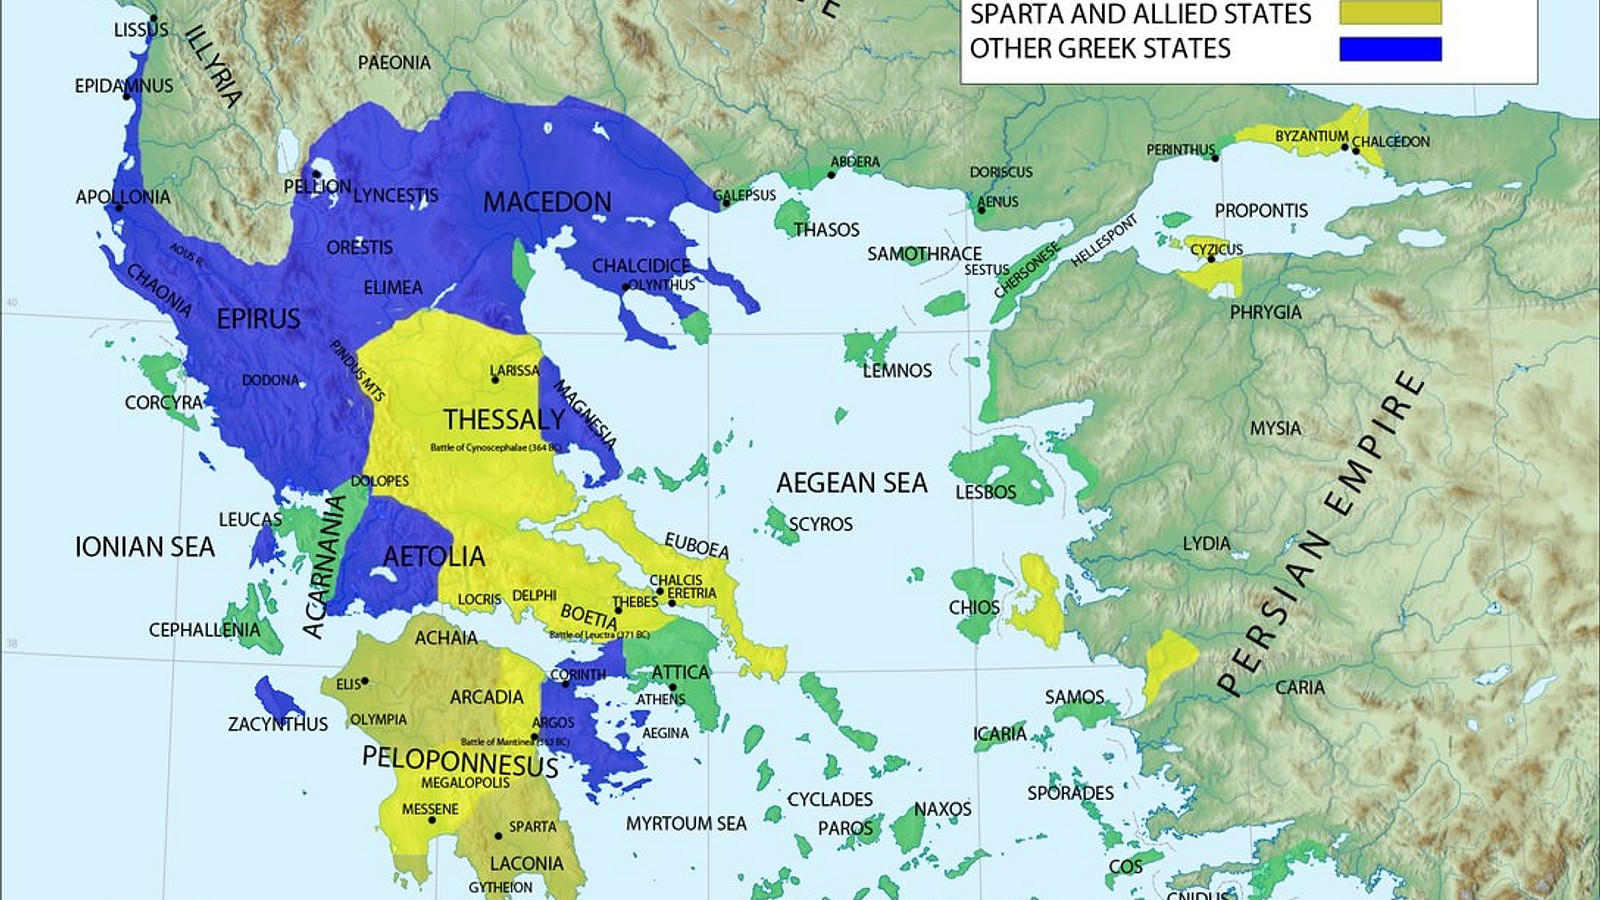 Thebes (Greece) - World History Encyclopedia